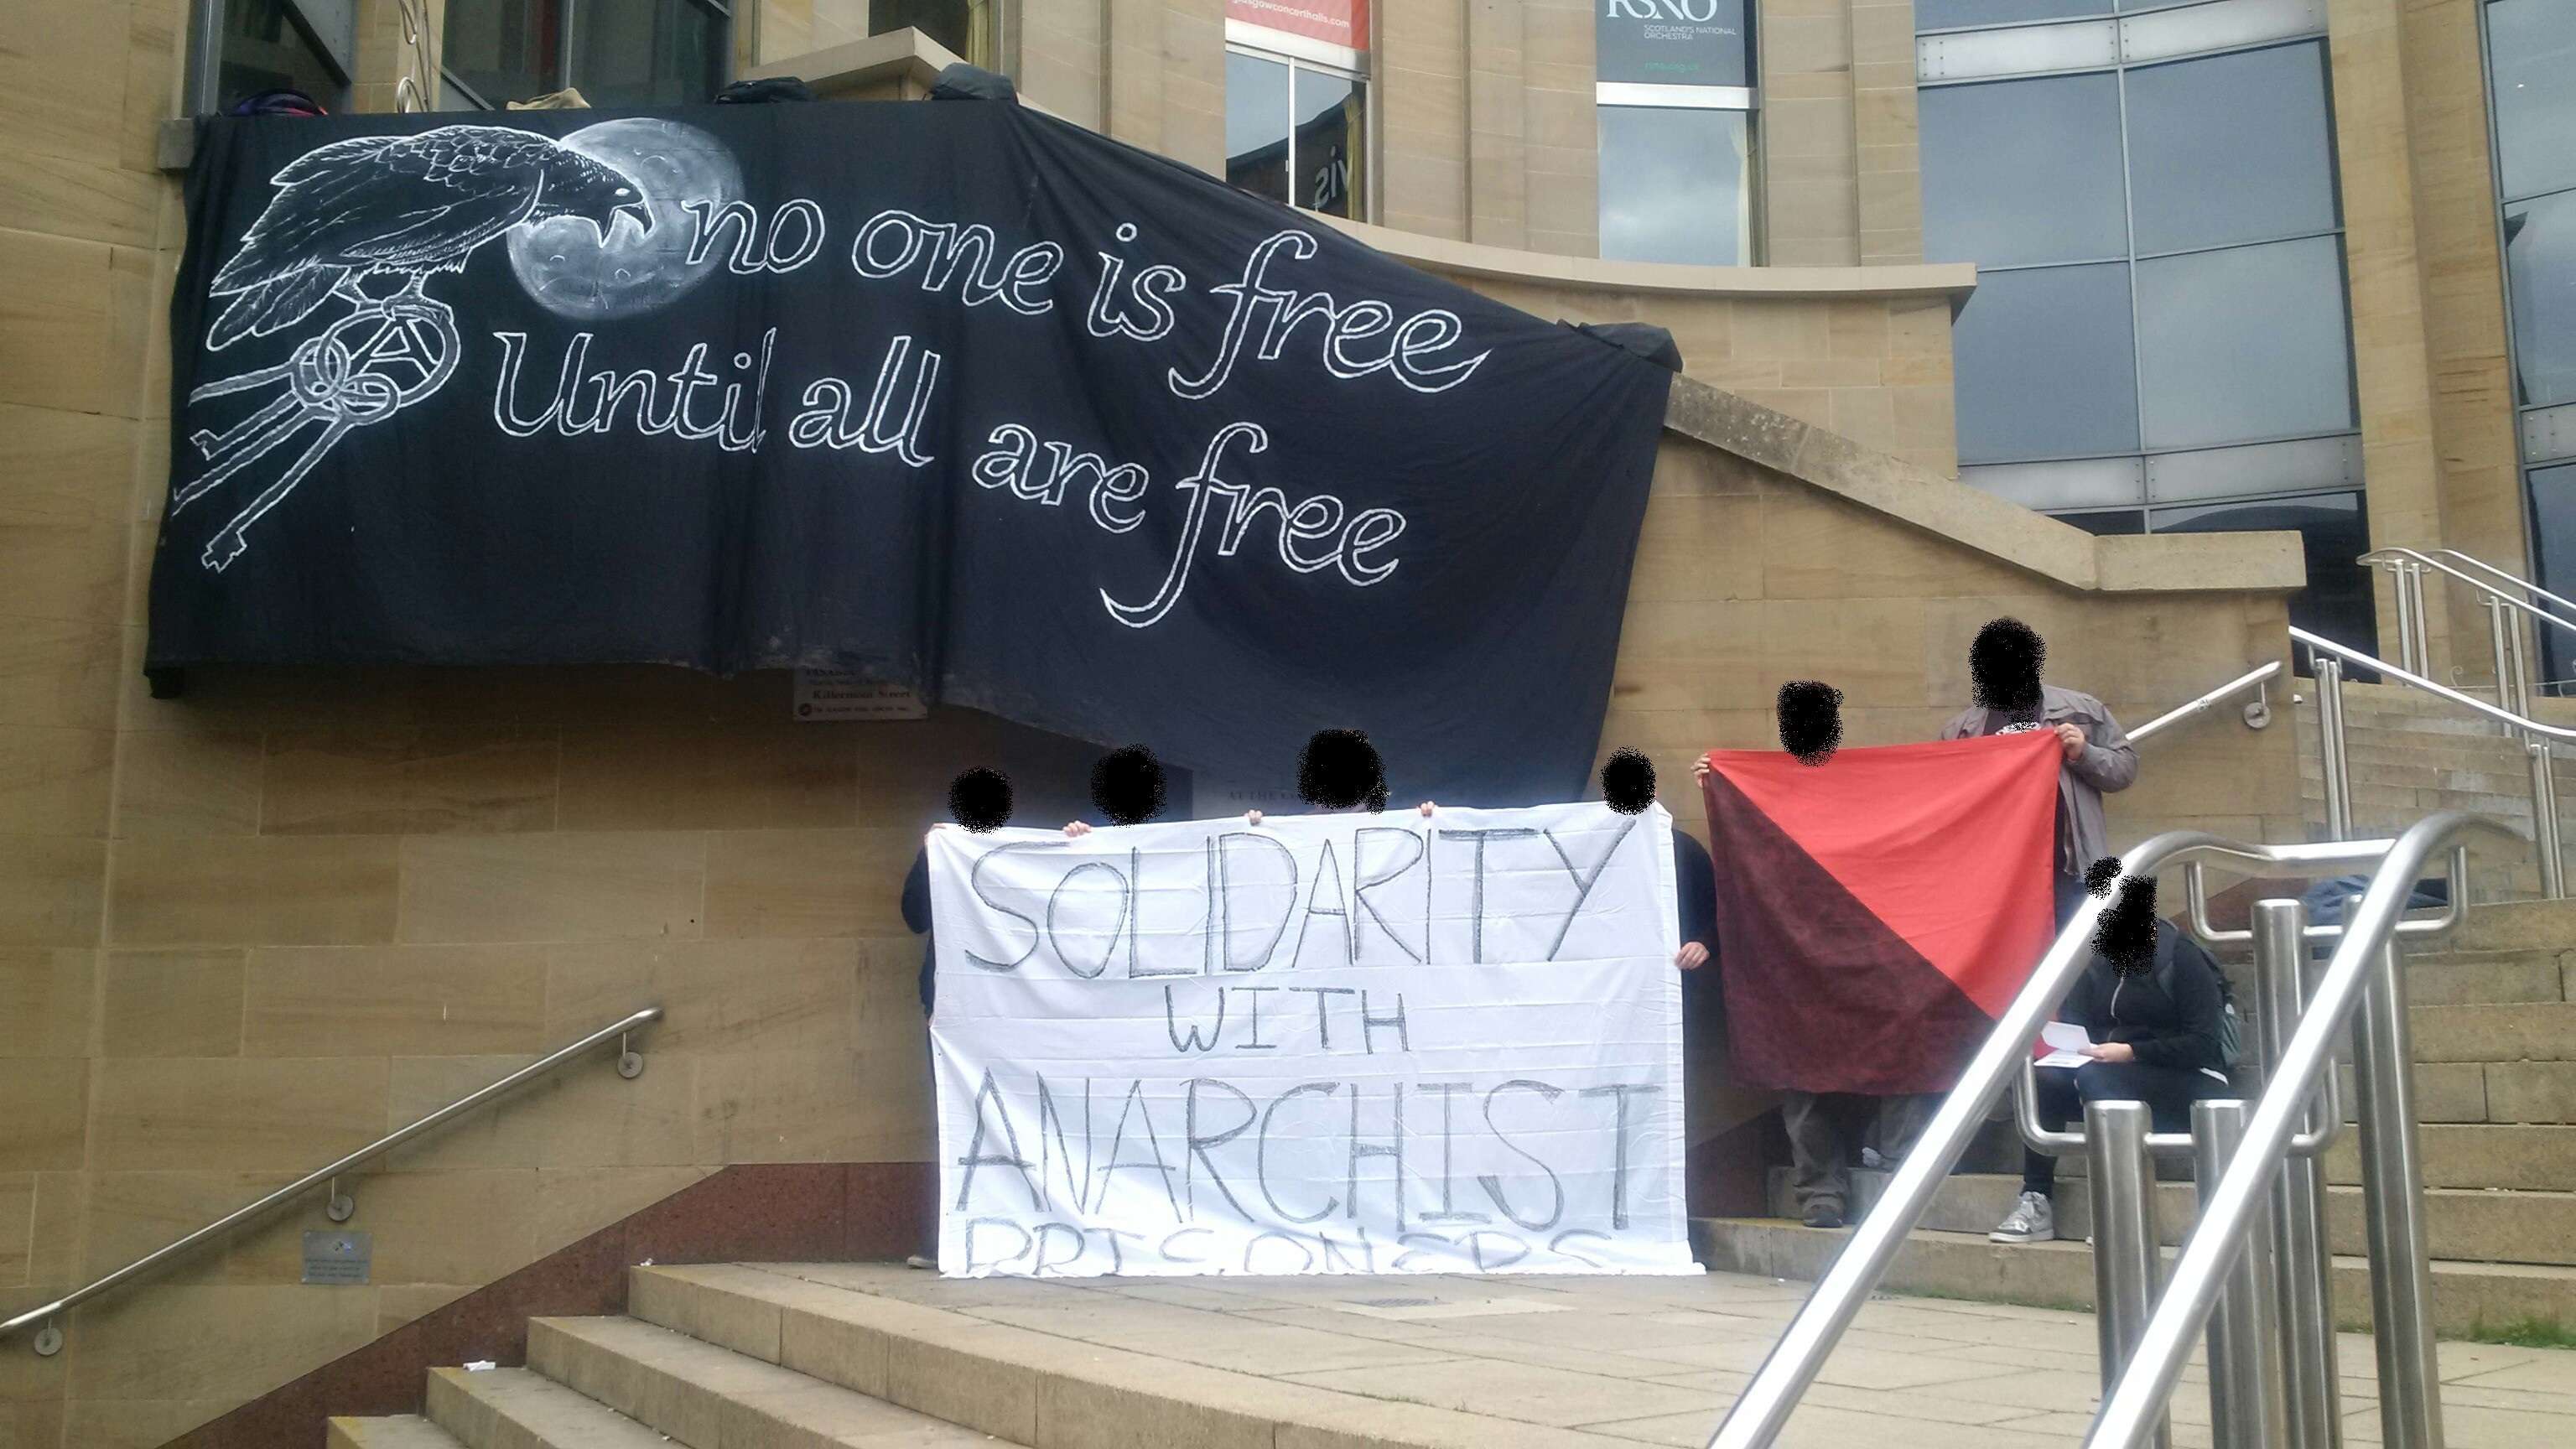 International week of solidarity with anarchist prisoners – 30/9, Glasgow (Scotland)